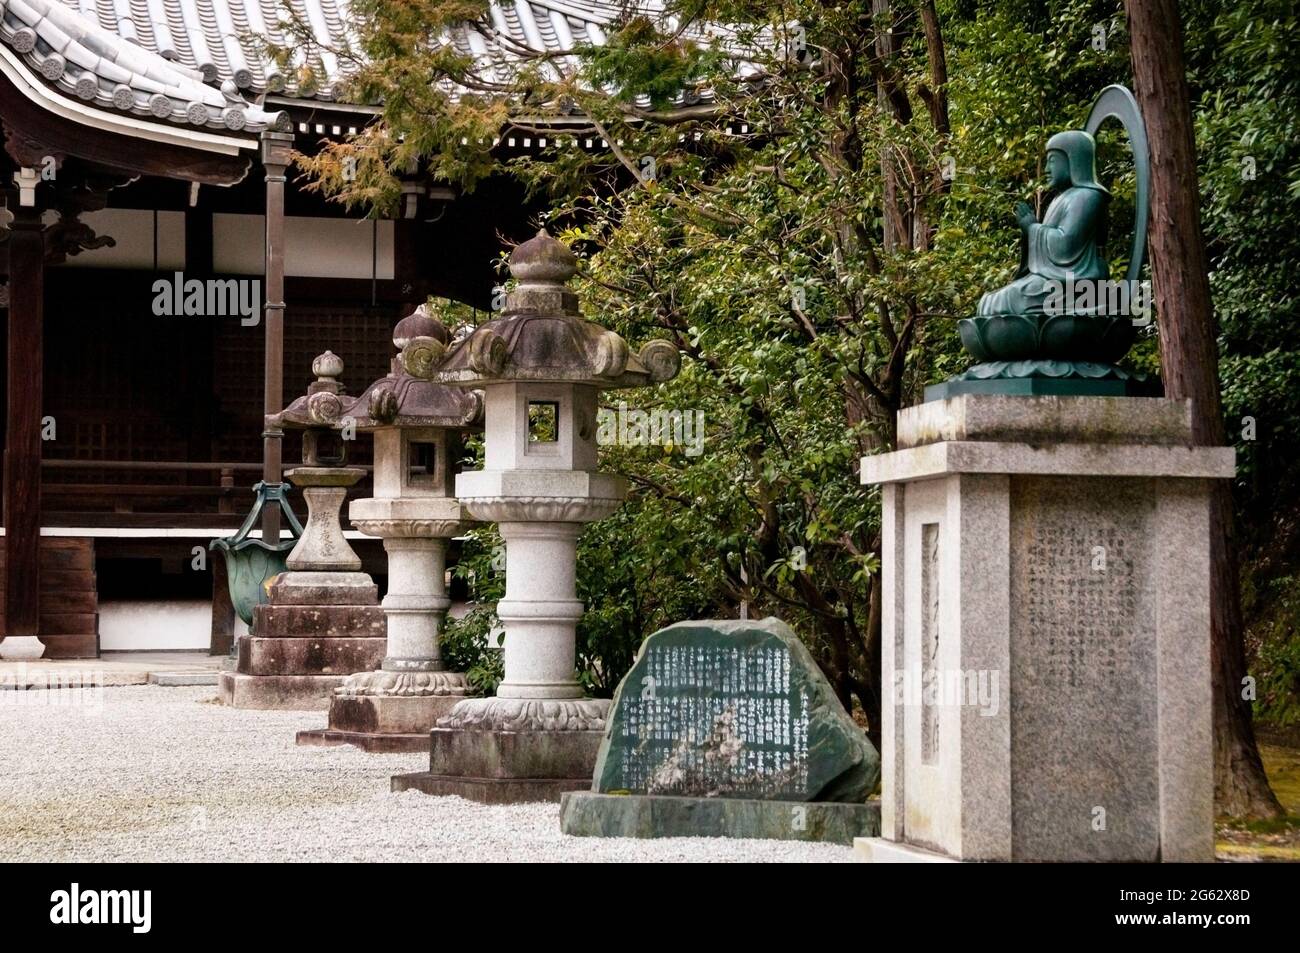 Japanese zen garden at Chishaku Buddhist Temple in Kyoto, Japan. Stock Photo